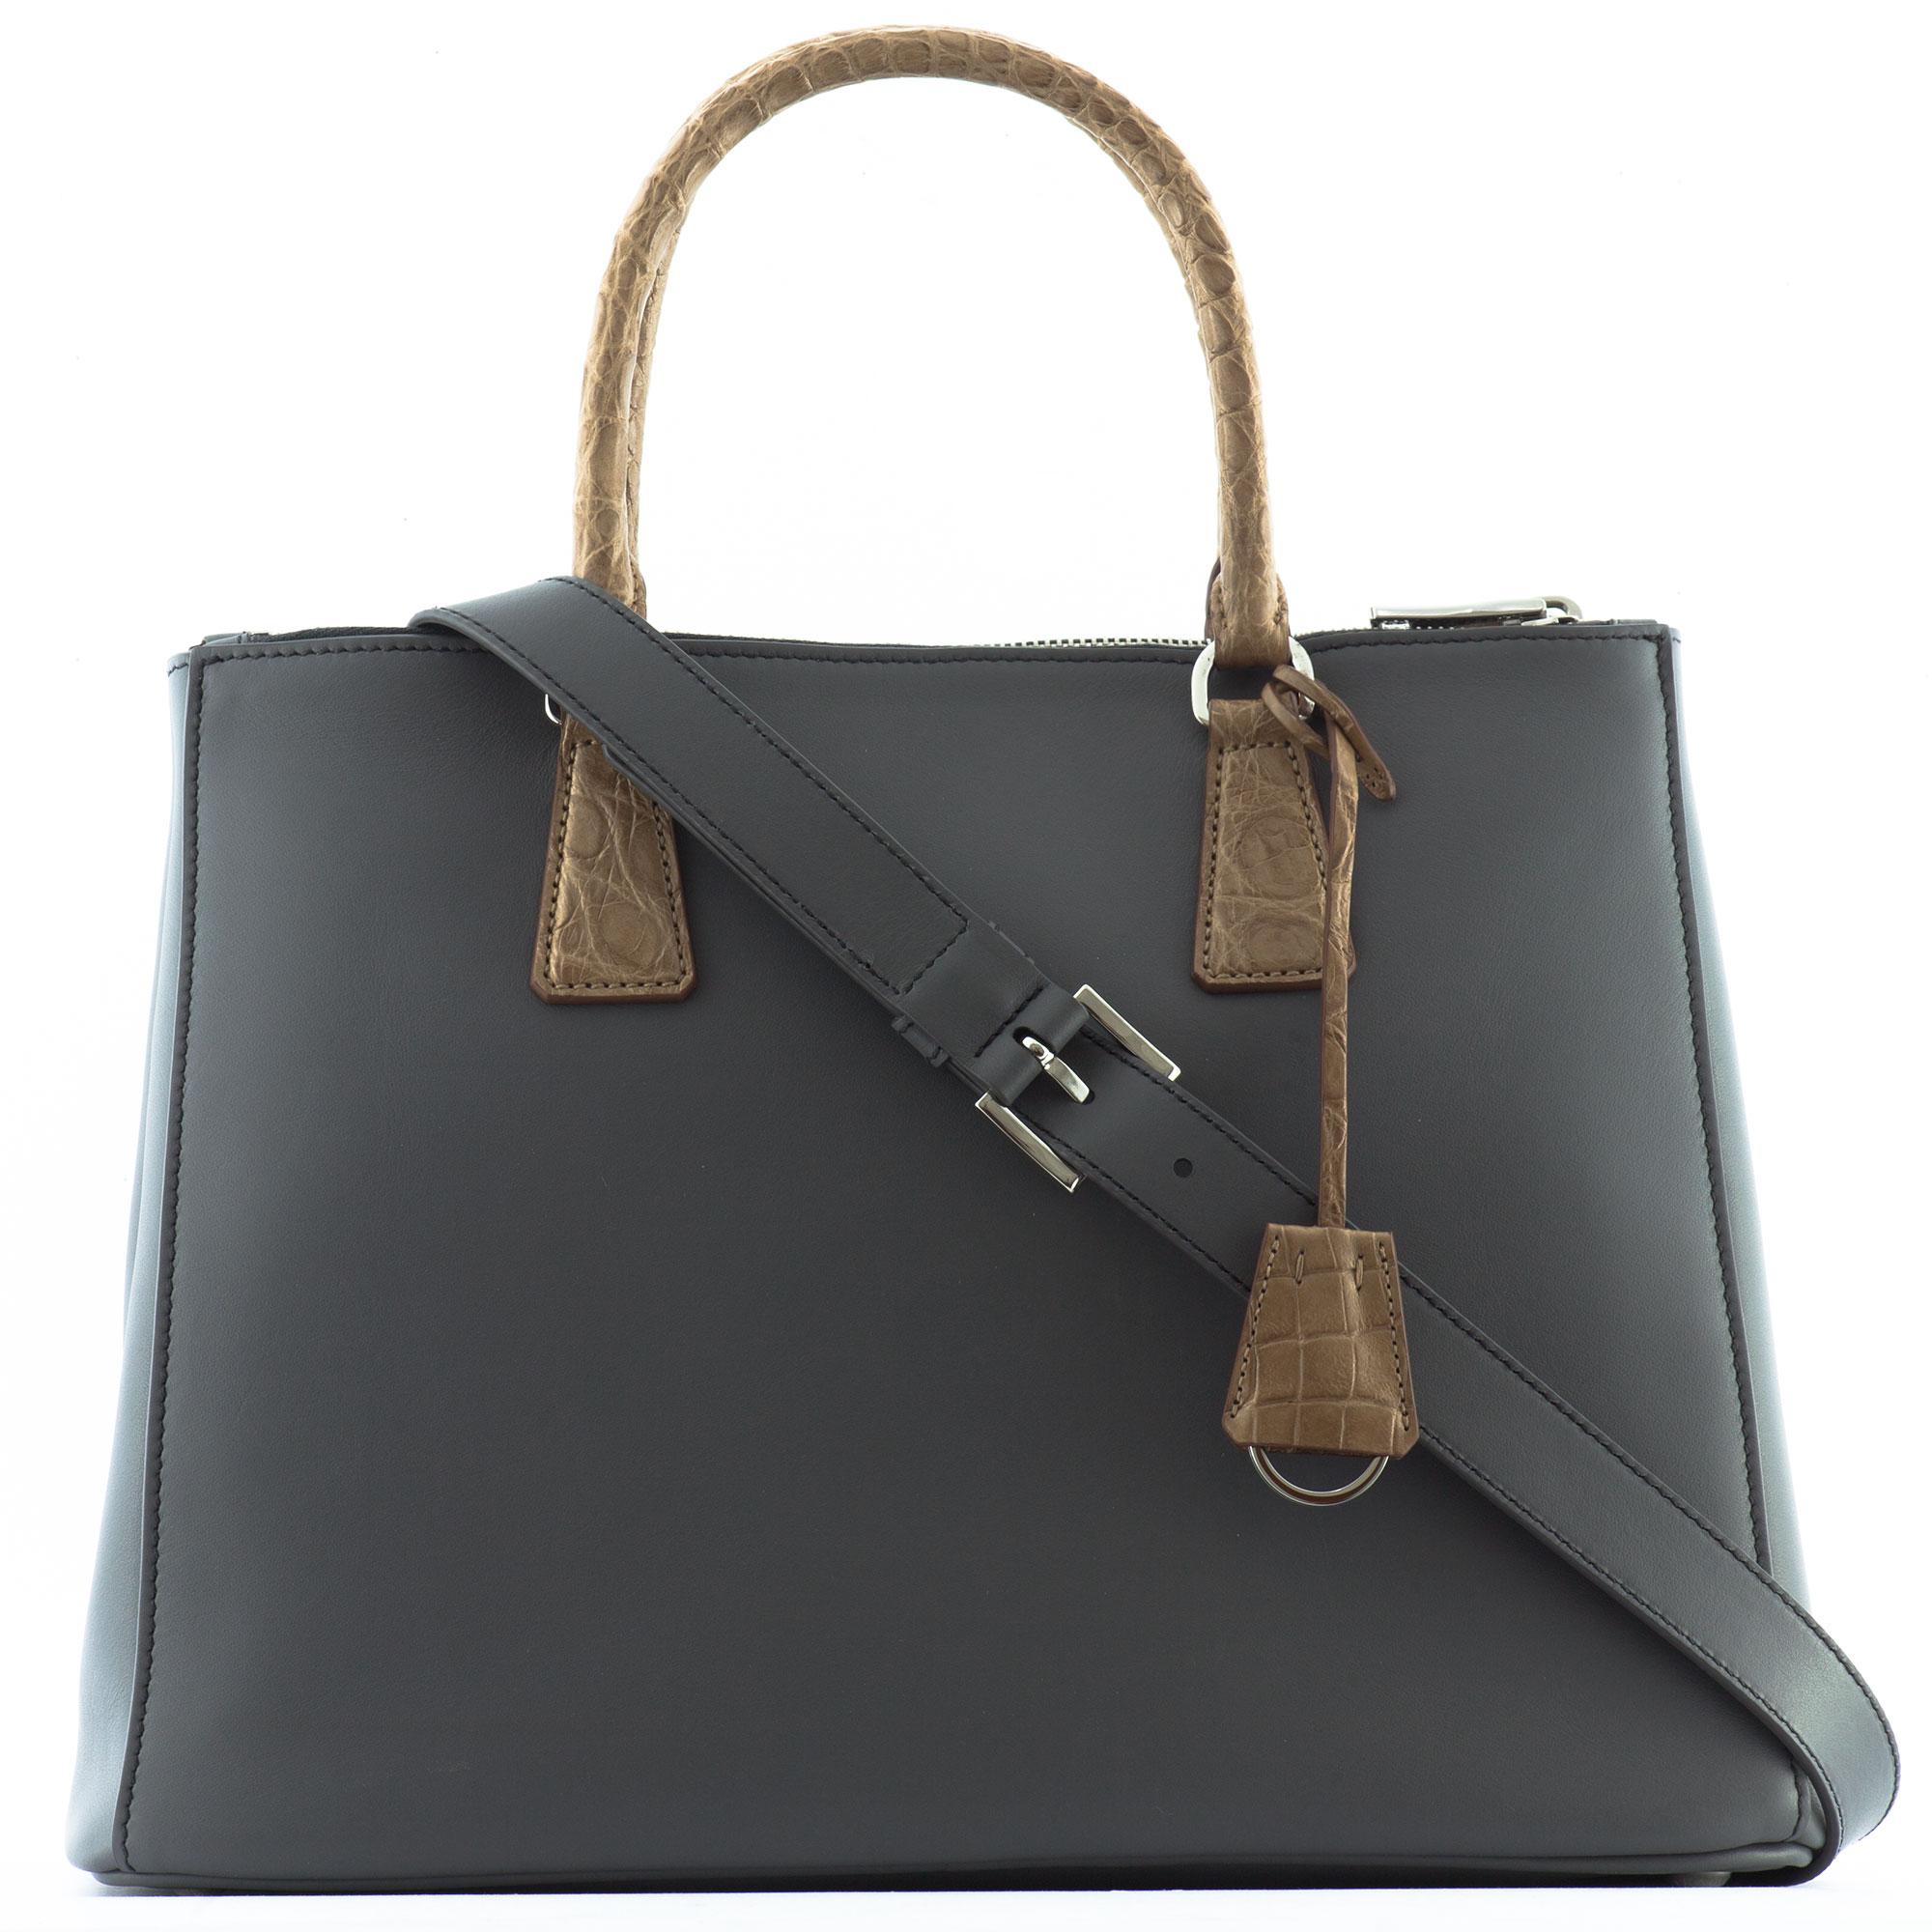 Lyst - Prada Leather Handbag in Gray